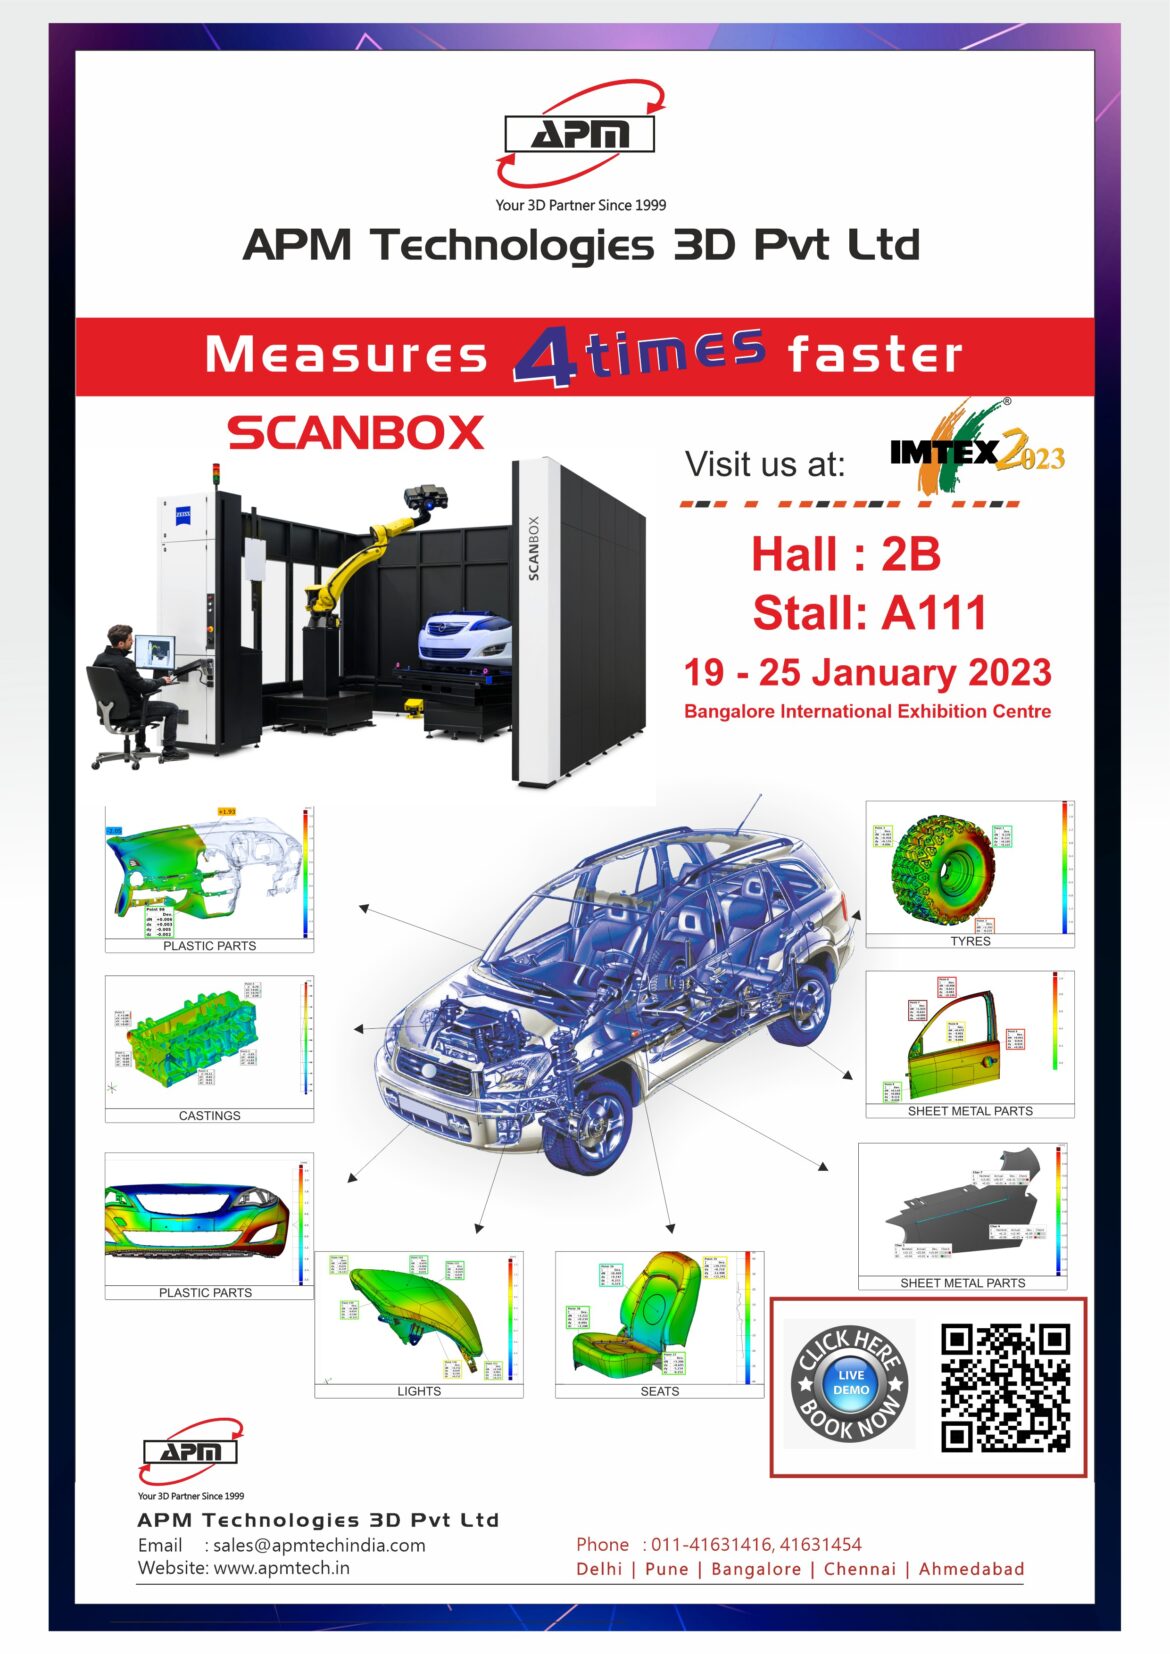 IMTEX Invitation Call-Out : APM Technologies 3D Pvt Ltd